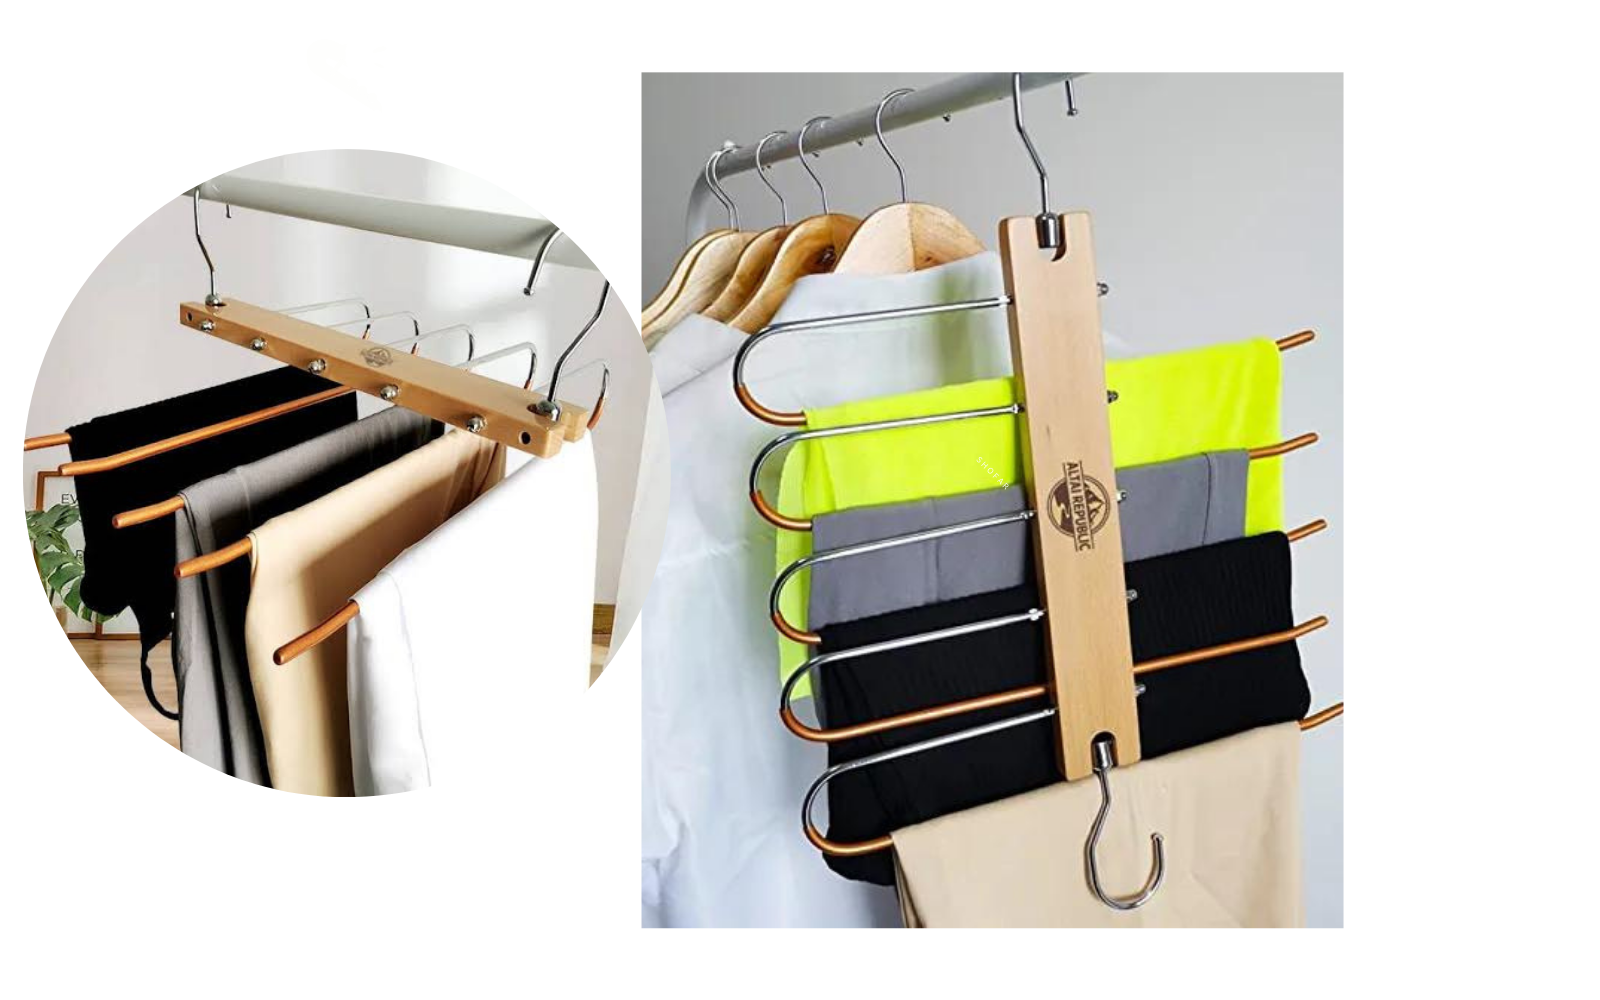 Trouser hanger Space saving hangers for wardrobes 5 India  Ubuy